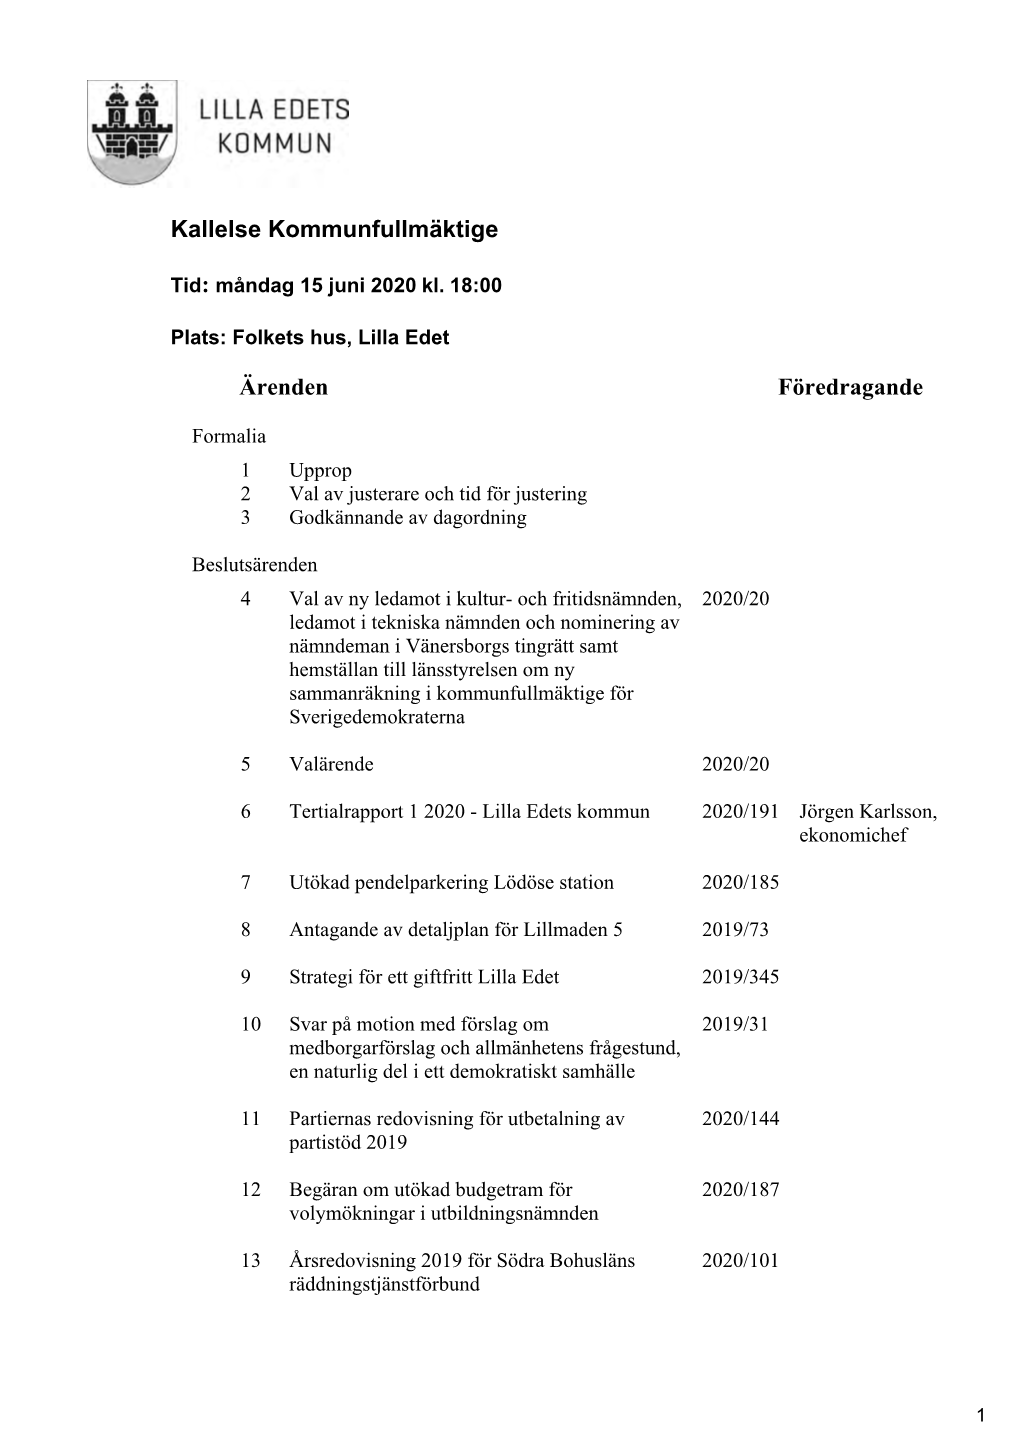 Kallelse KF 2020-06-15.Pdf